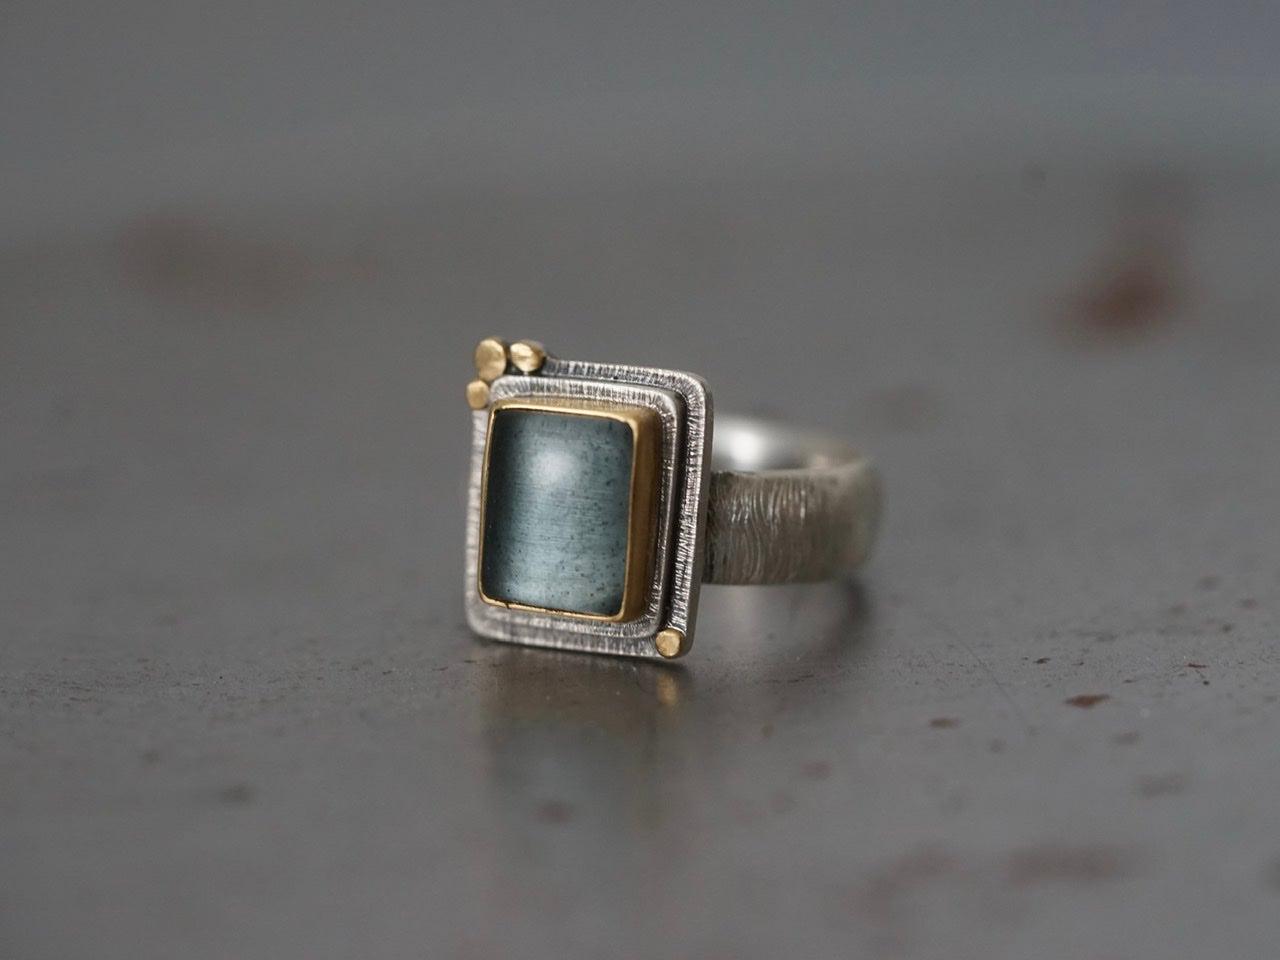 Rectangular aquamarine and 22k gold statement ring, size 7.5